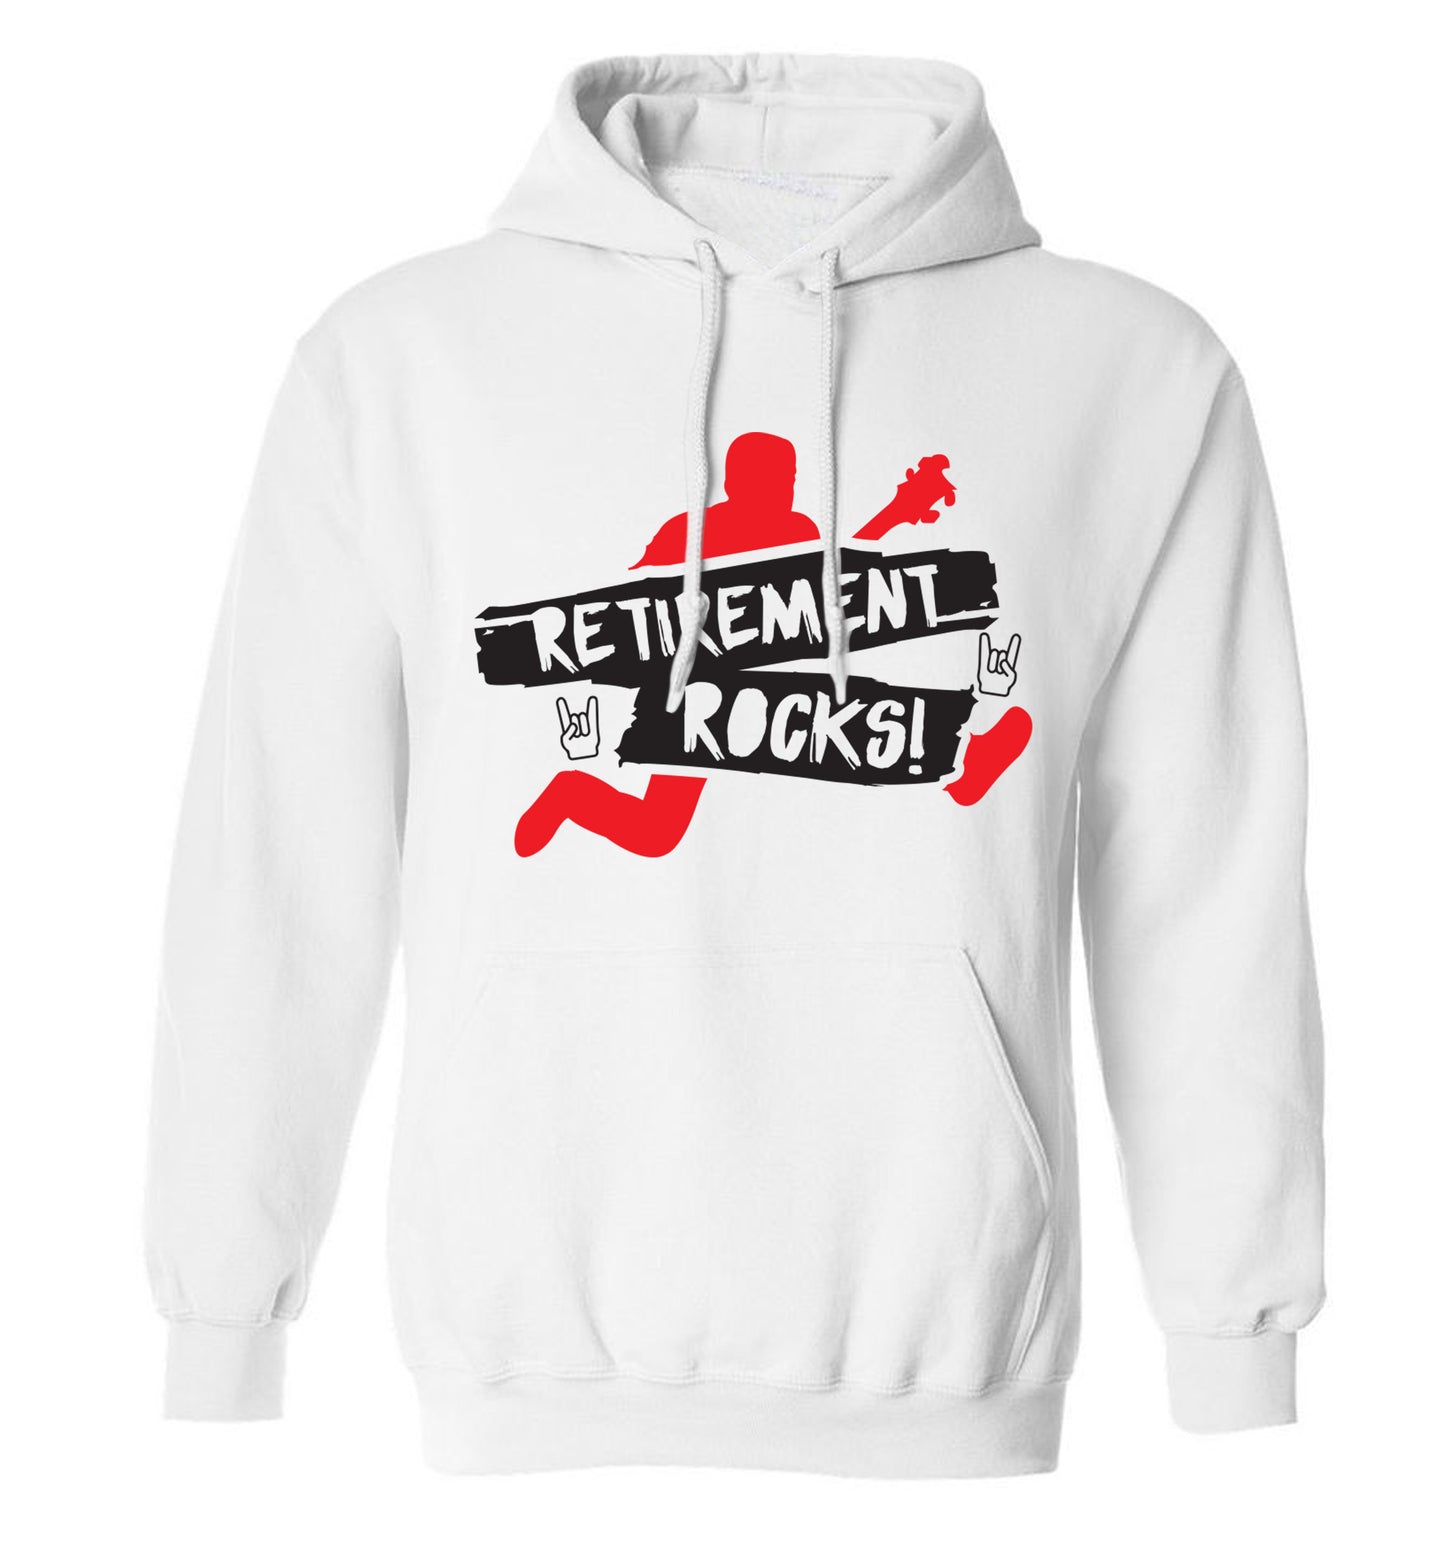 Retirement Rocks adults unisex white hoodie 2XL